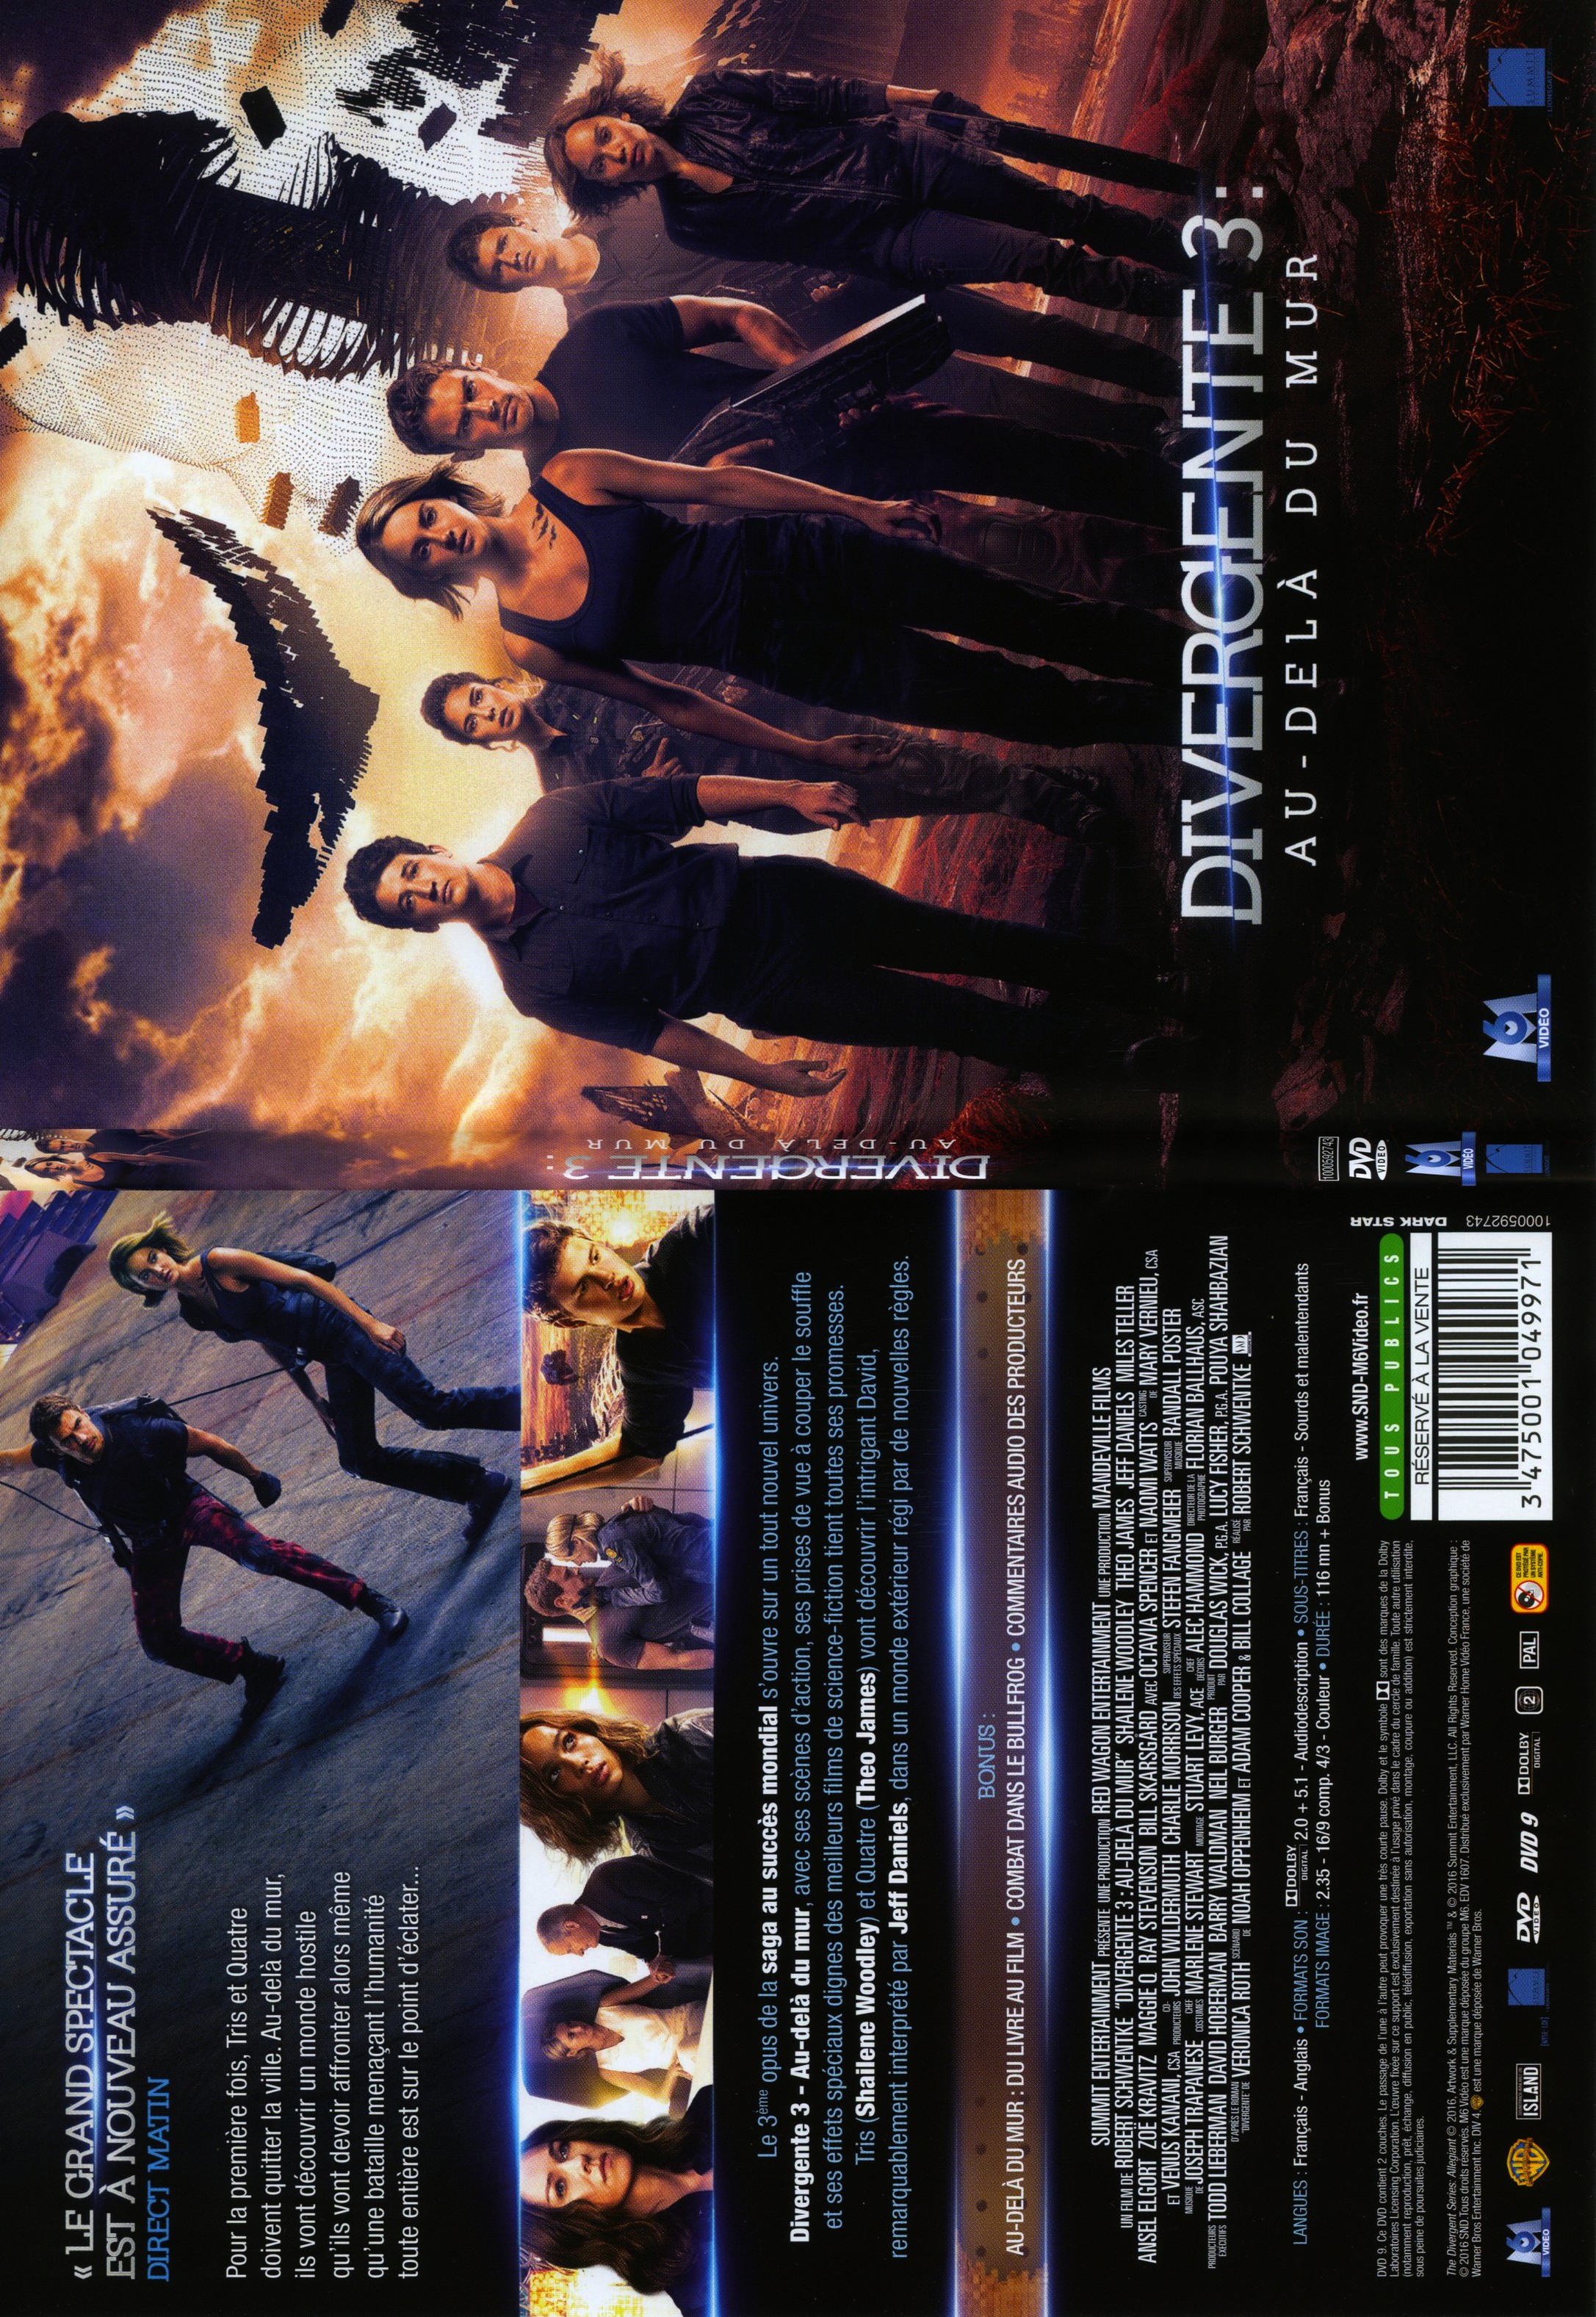 Jaquette DVD Divergente 3 - SLIM